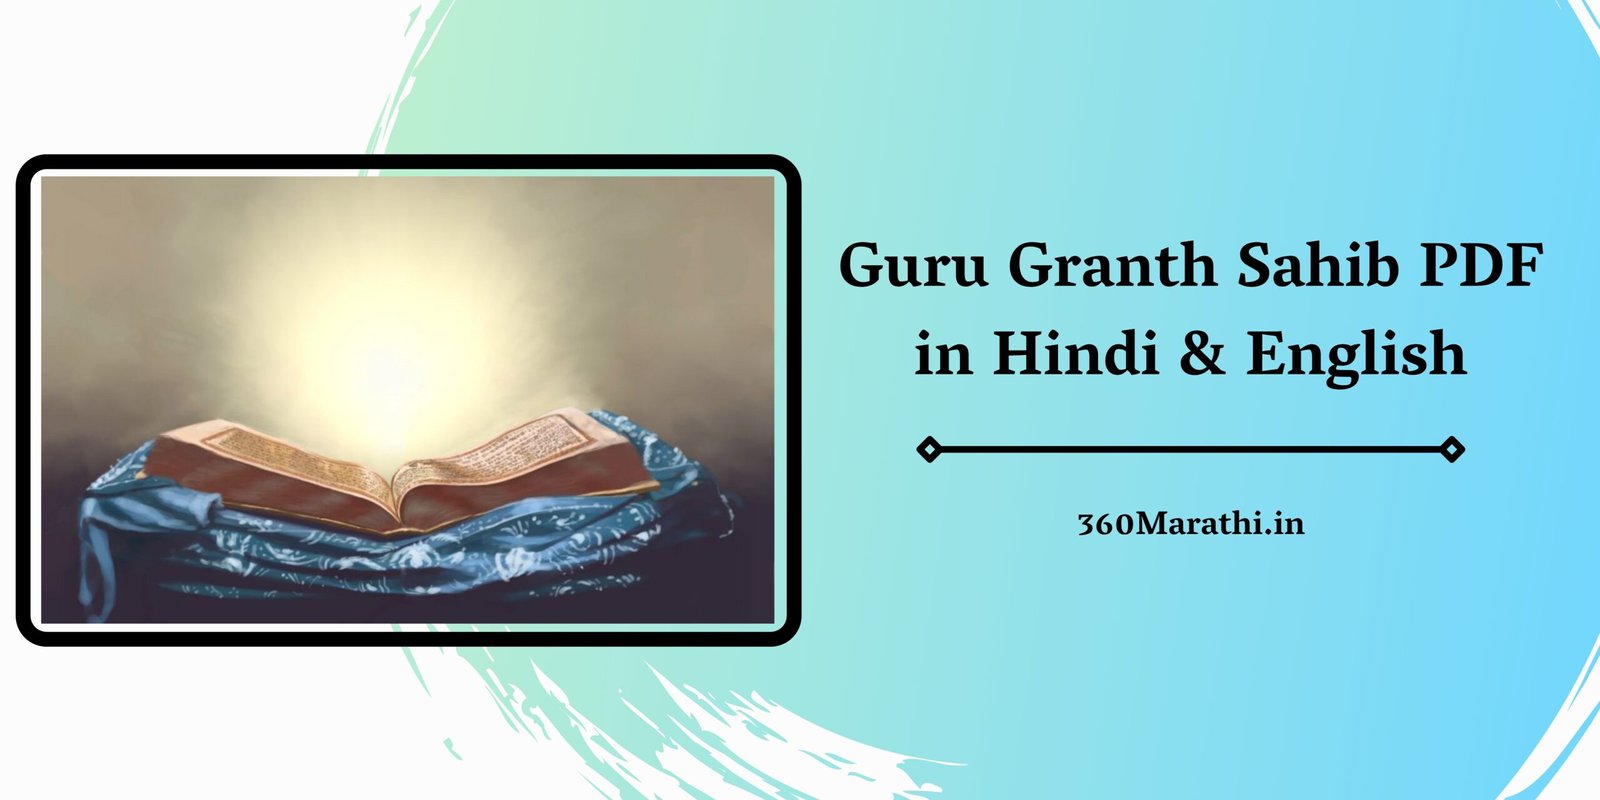 Guru Granth Sahib PDF